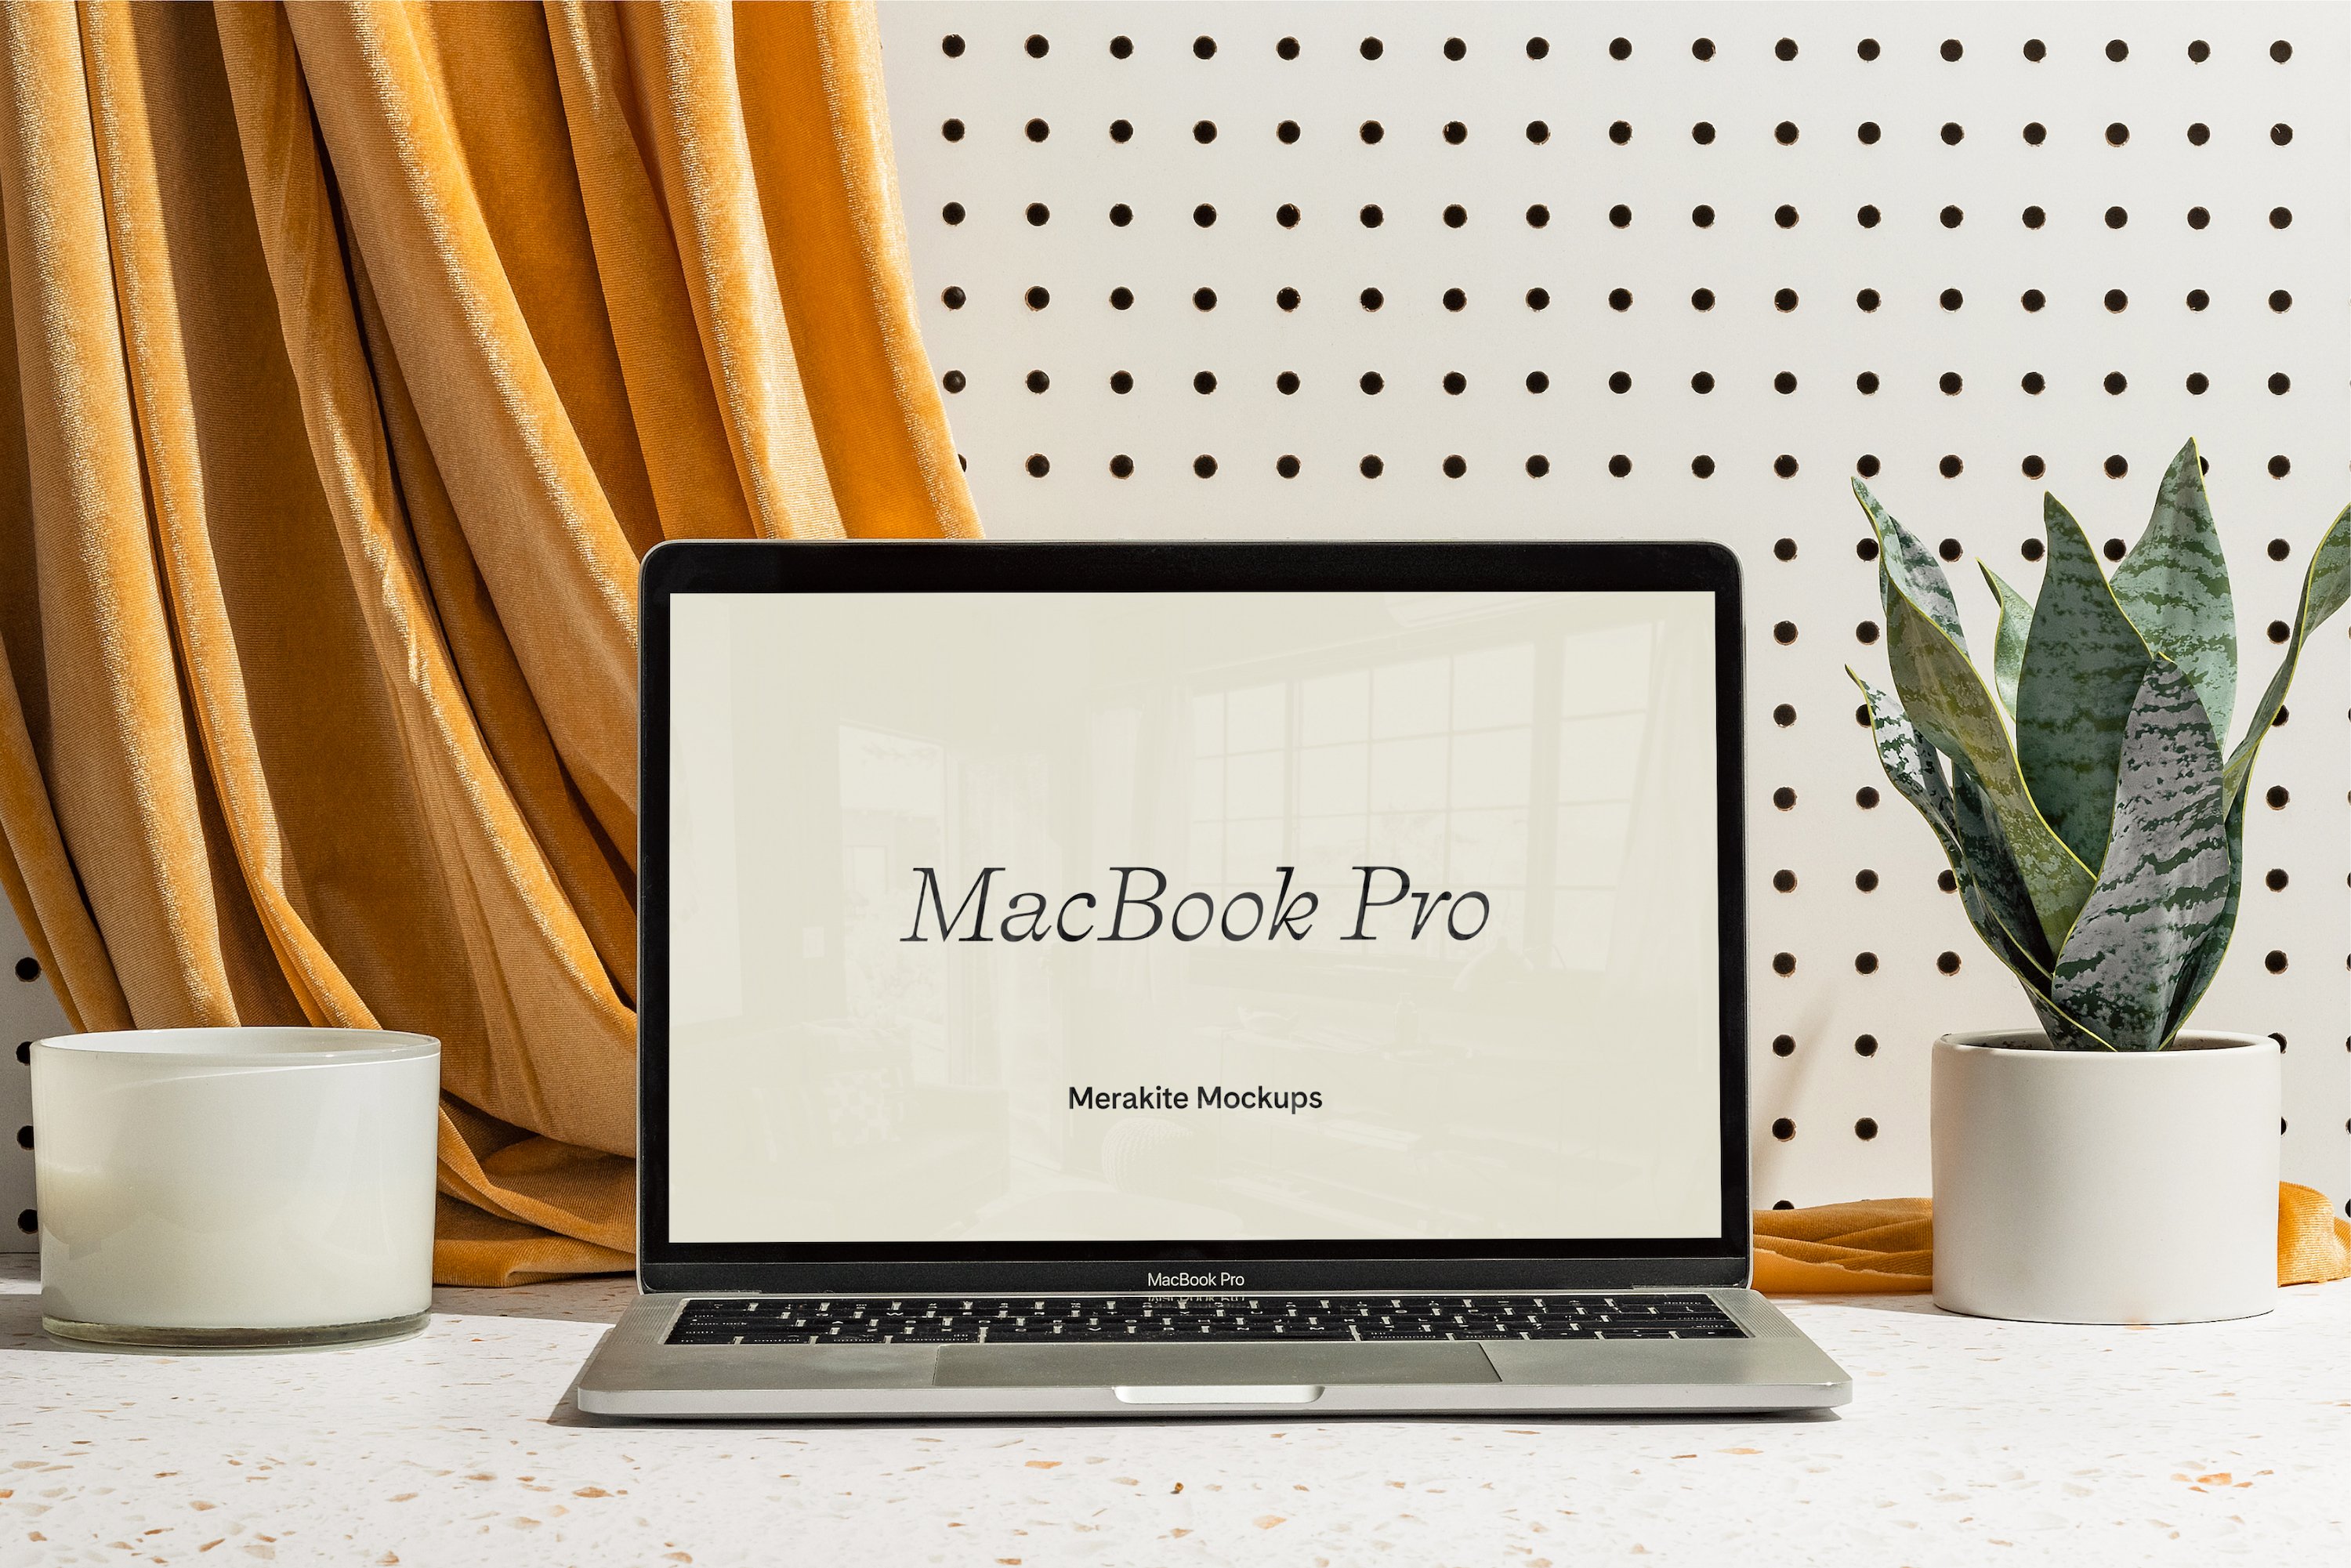 MacBook Pro Photoshop PSD Mockup cover image.